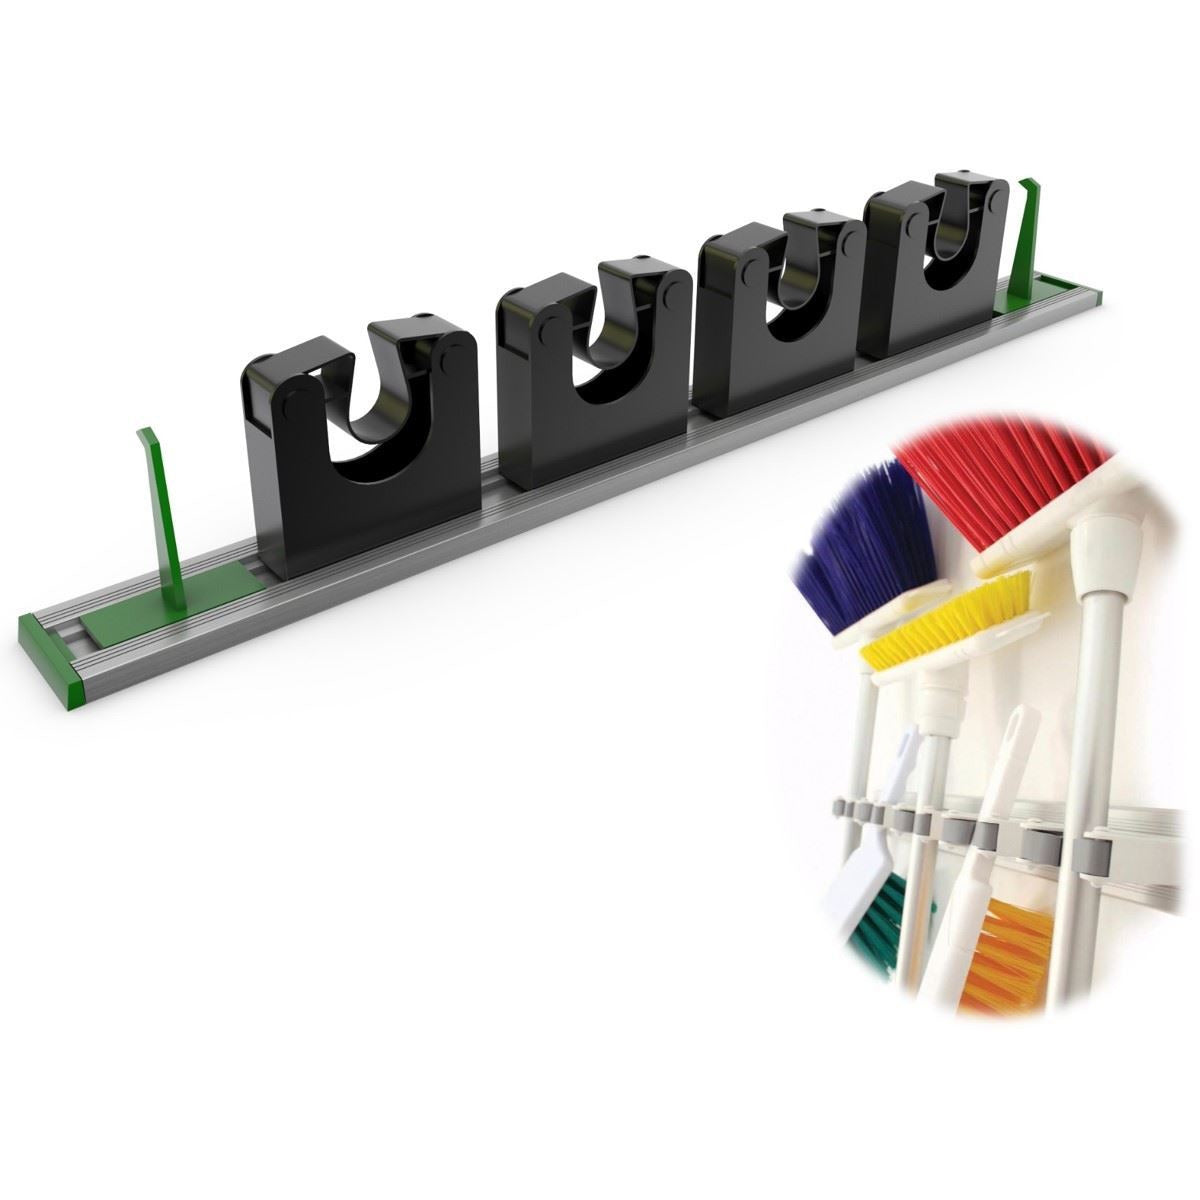 Aluminium Metal Mop and Broom Holder Tool Wall Clip Hygiene Holder Organiser Tidy - The Dustpan and Brush Store